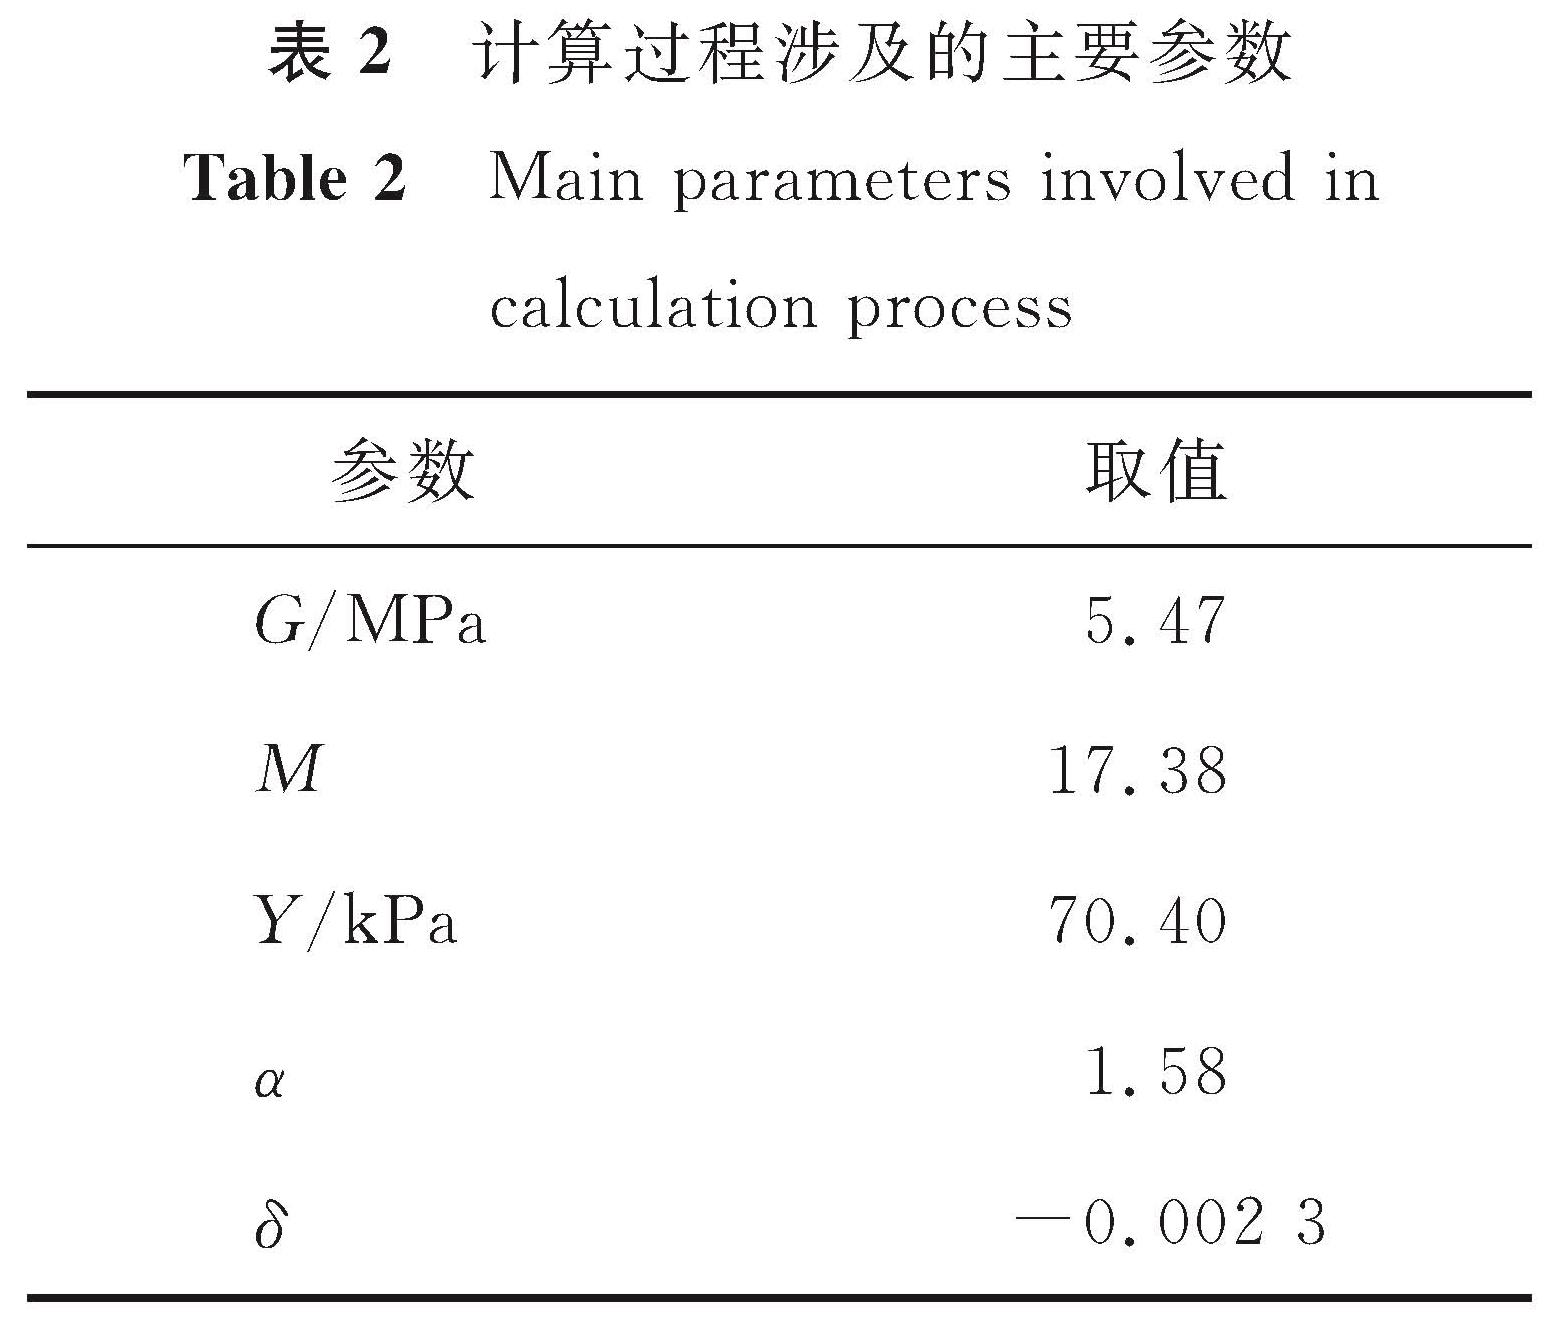 表2 计算过程涉及的主要参数<br/>Table 2 Main parameters involved in calculation process